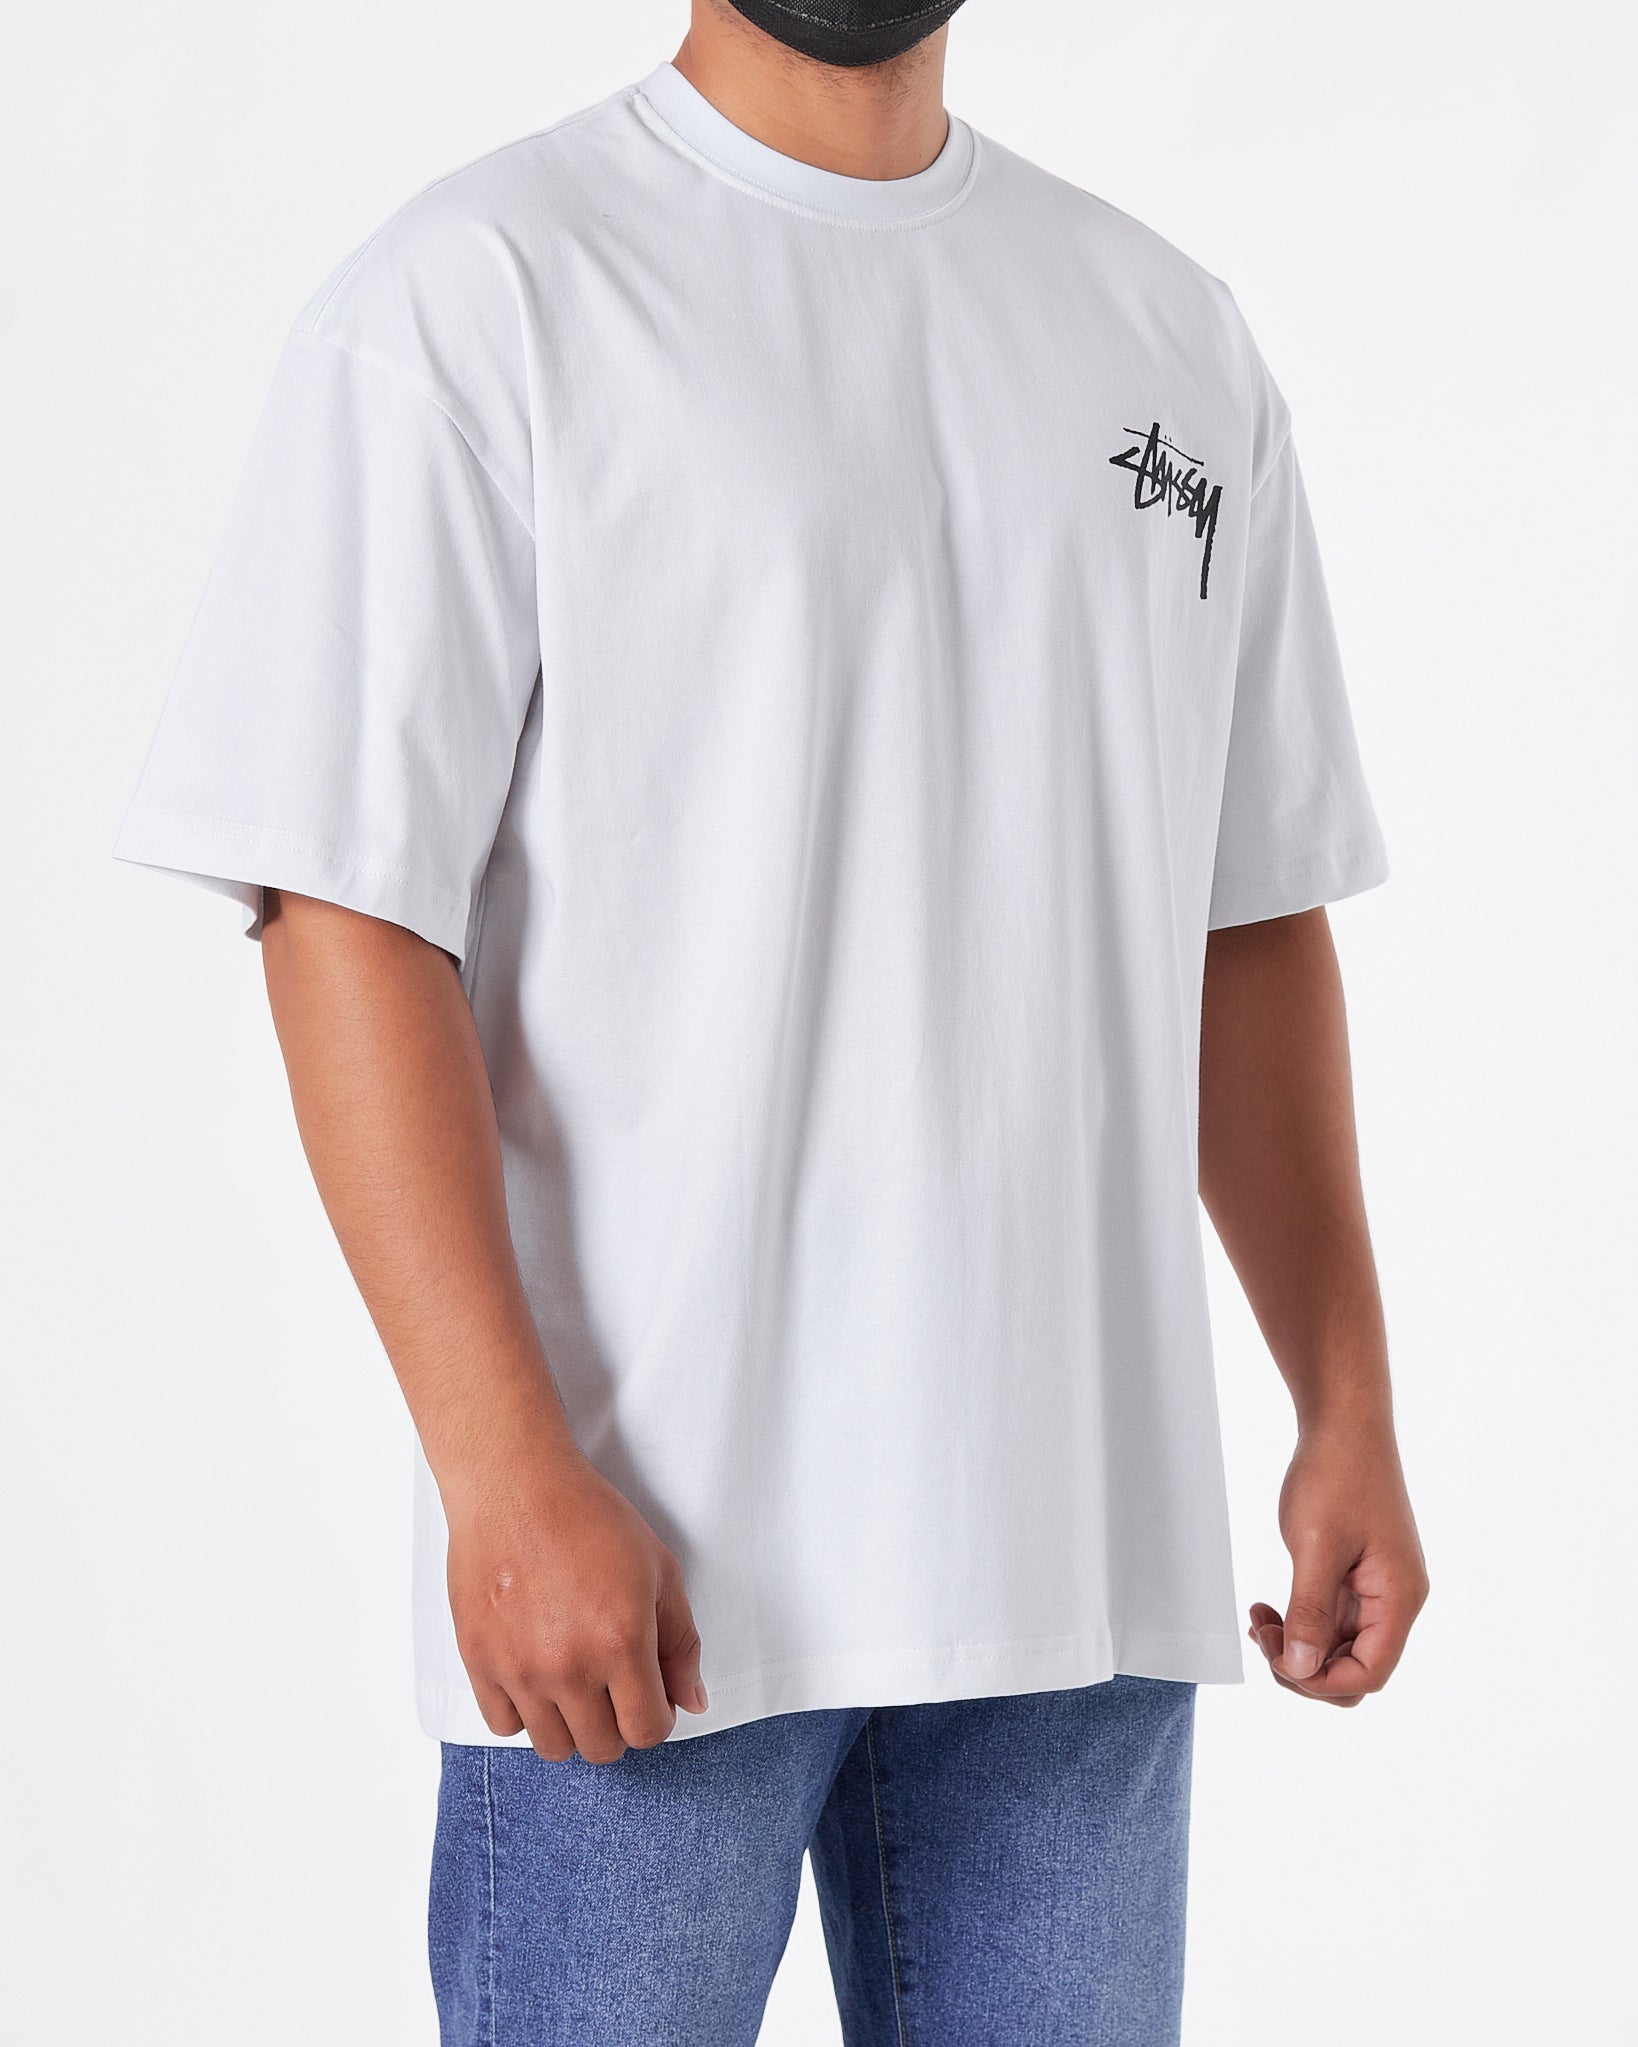 STU Floral Back Logo Printed Men White T-Shirt 19.90